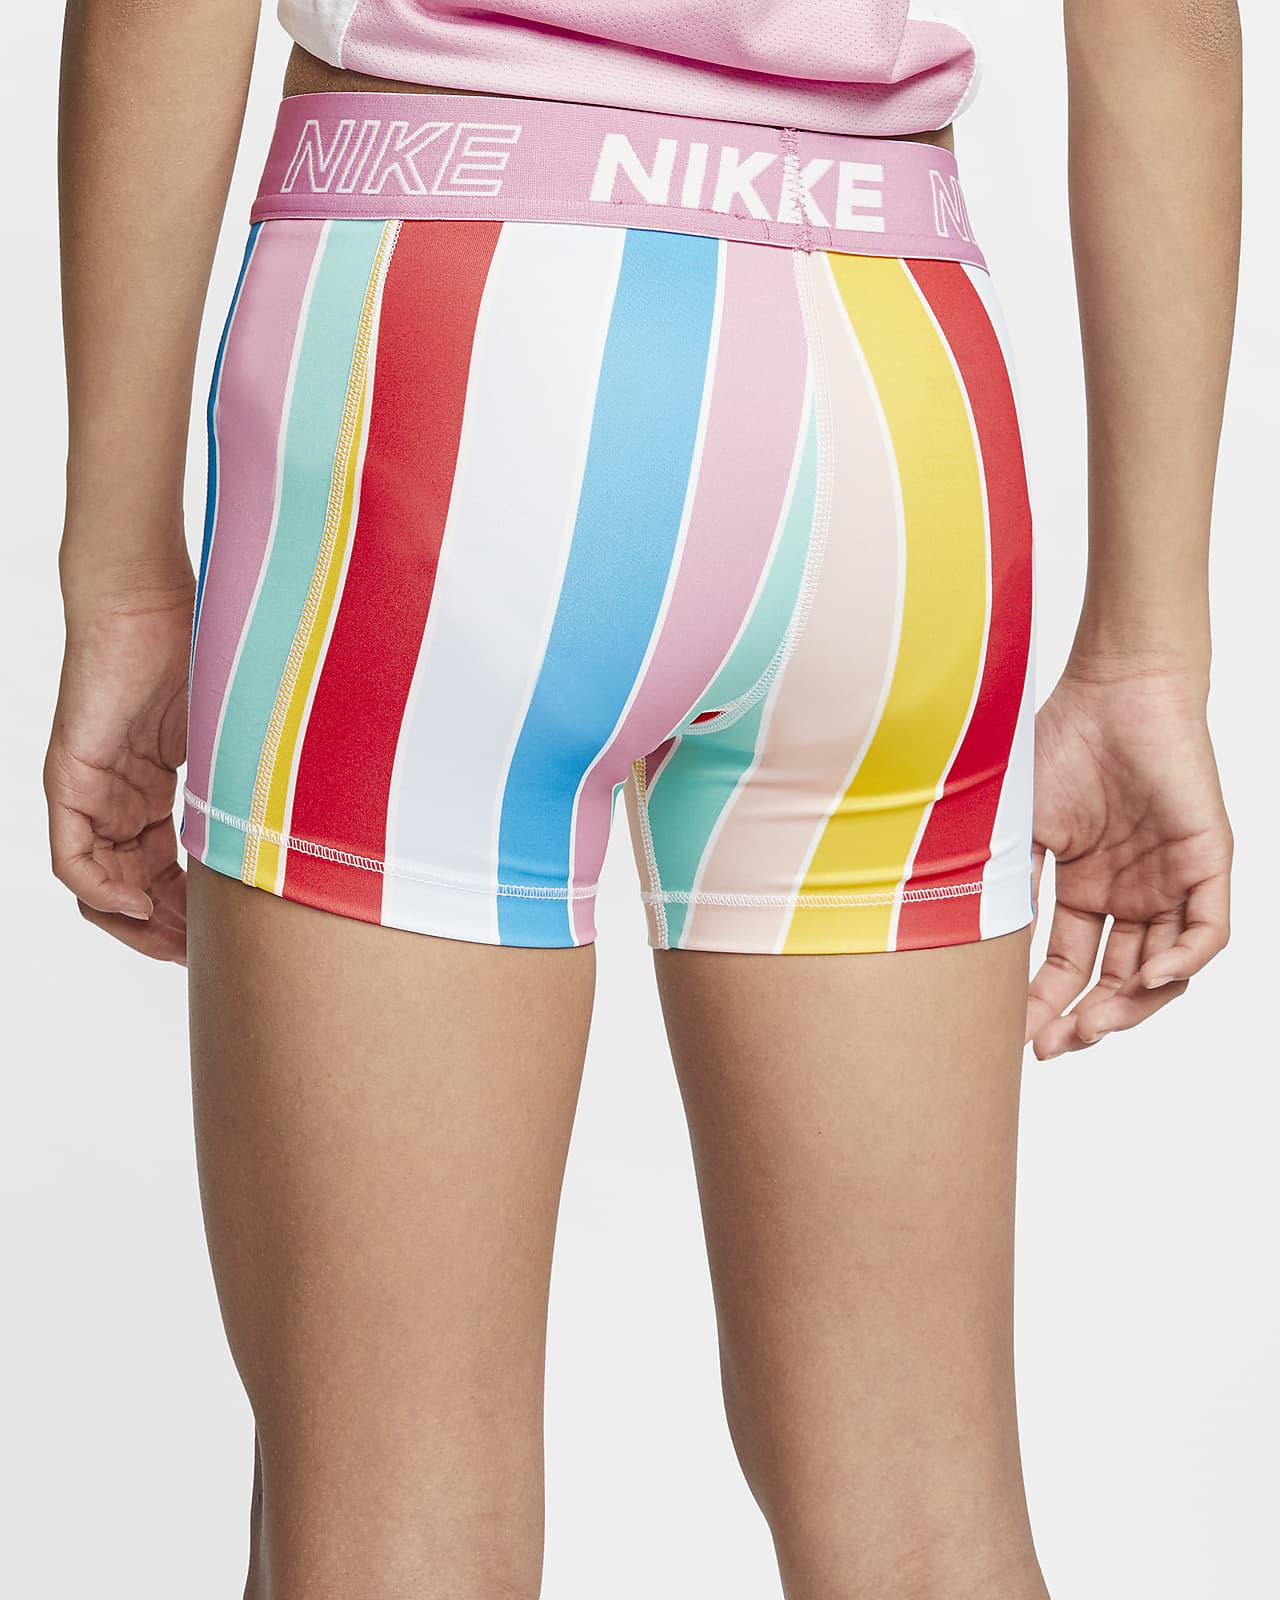 nike shorts colourful